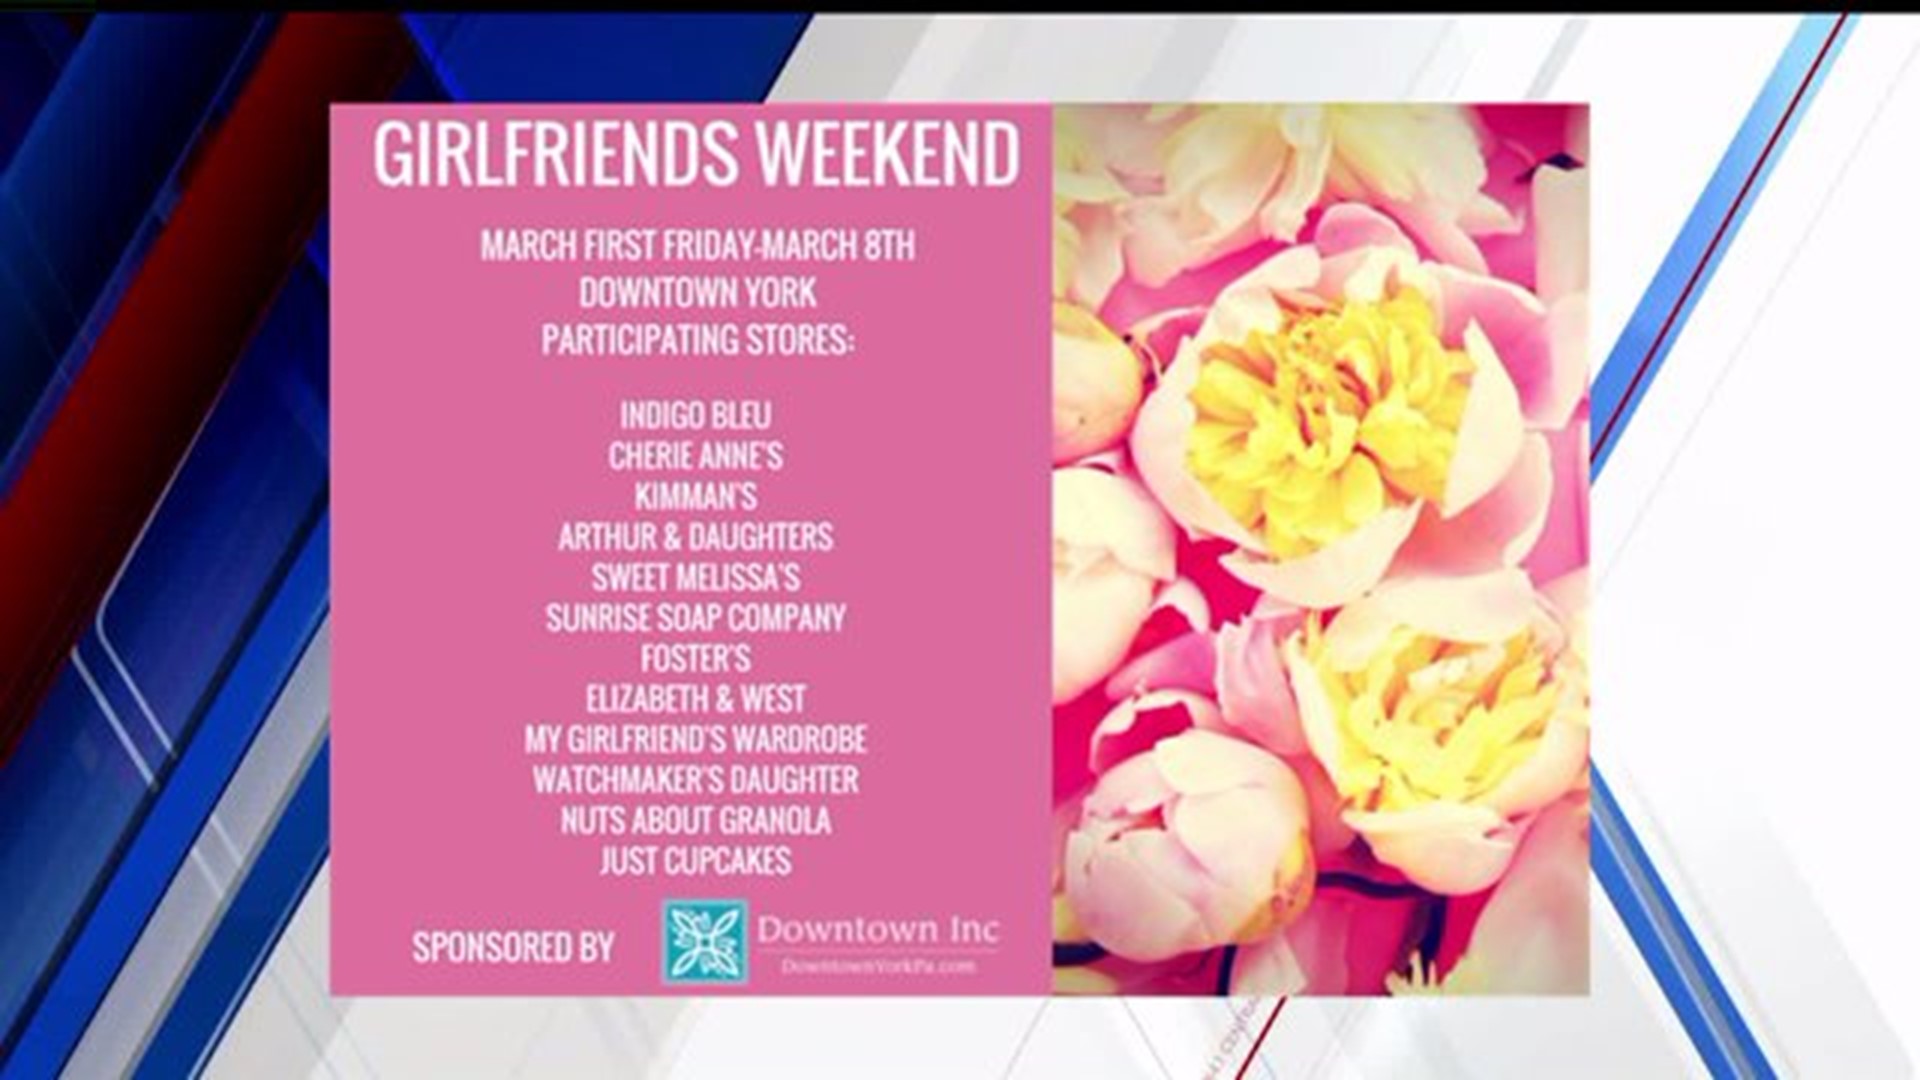 Girlfriends Weekend hits downtown York